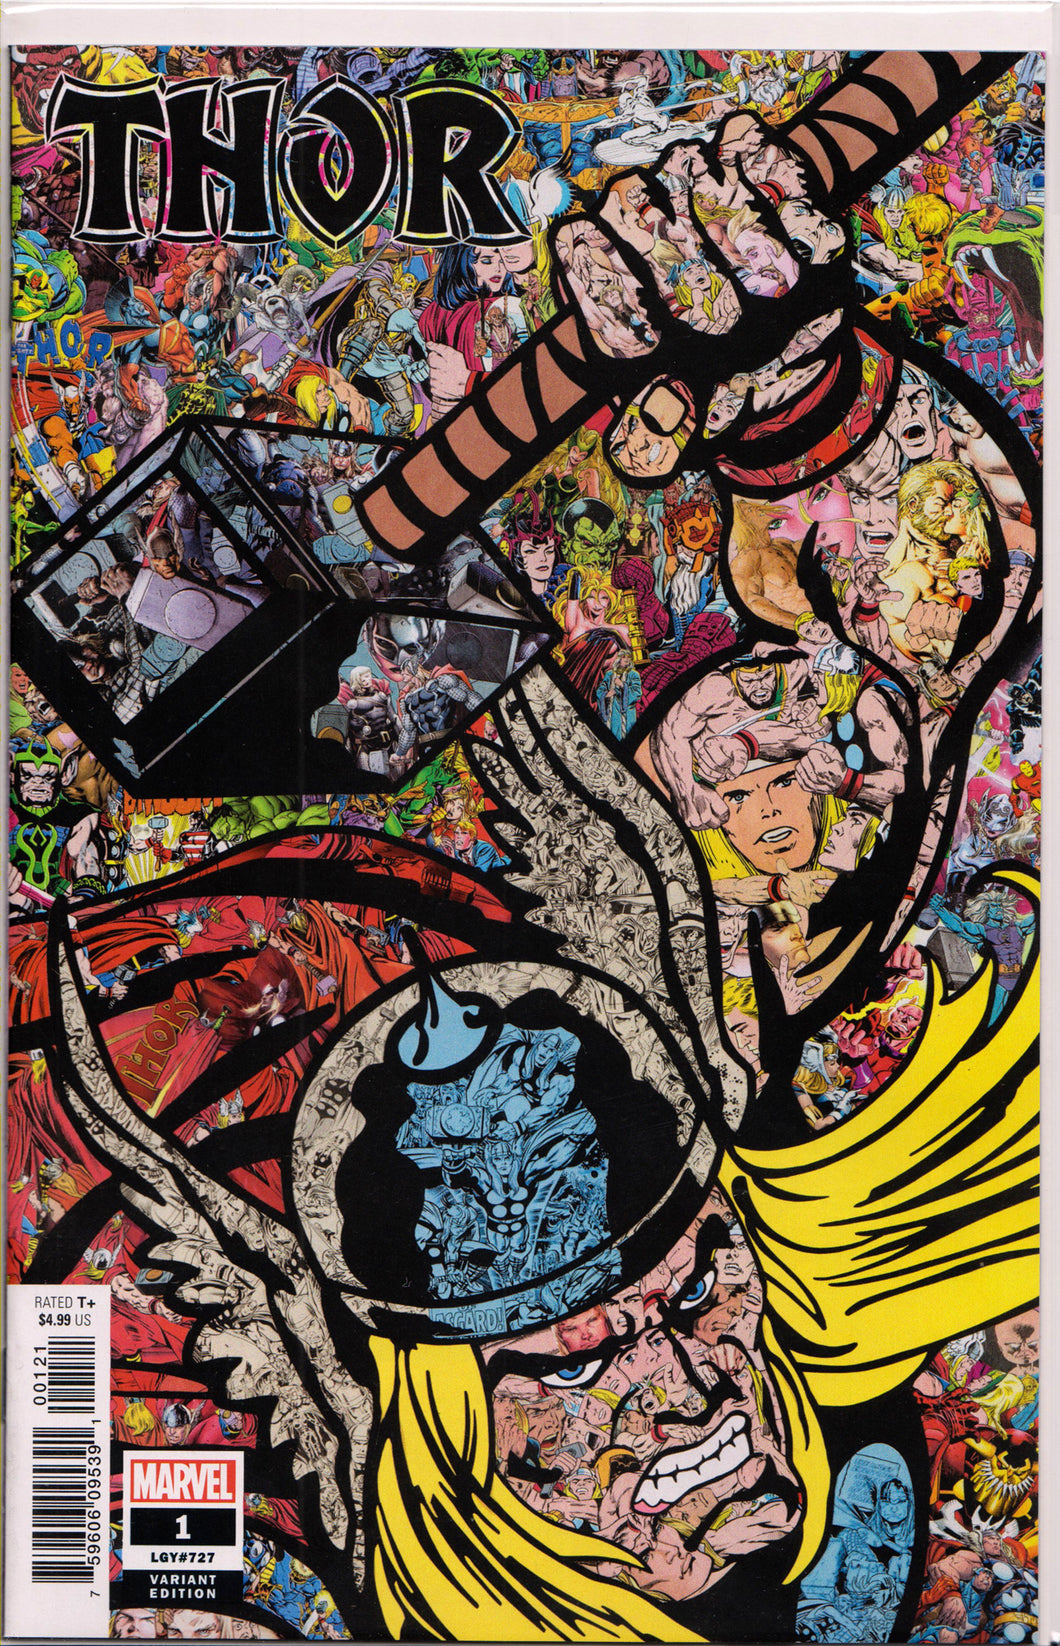 THOR #1 (COLLAGE VARIANT) COMIC BOOK ~ Marvel Comics